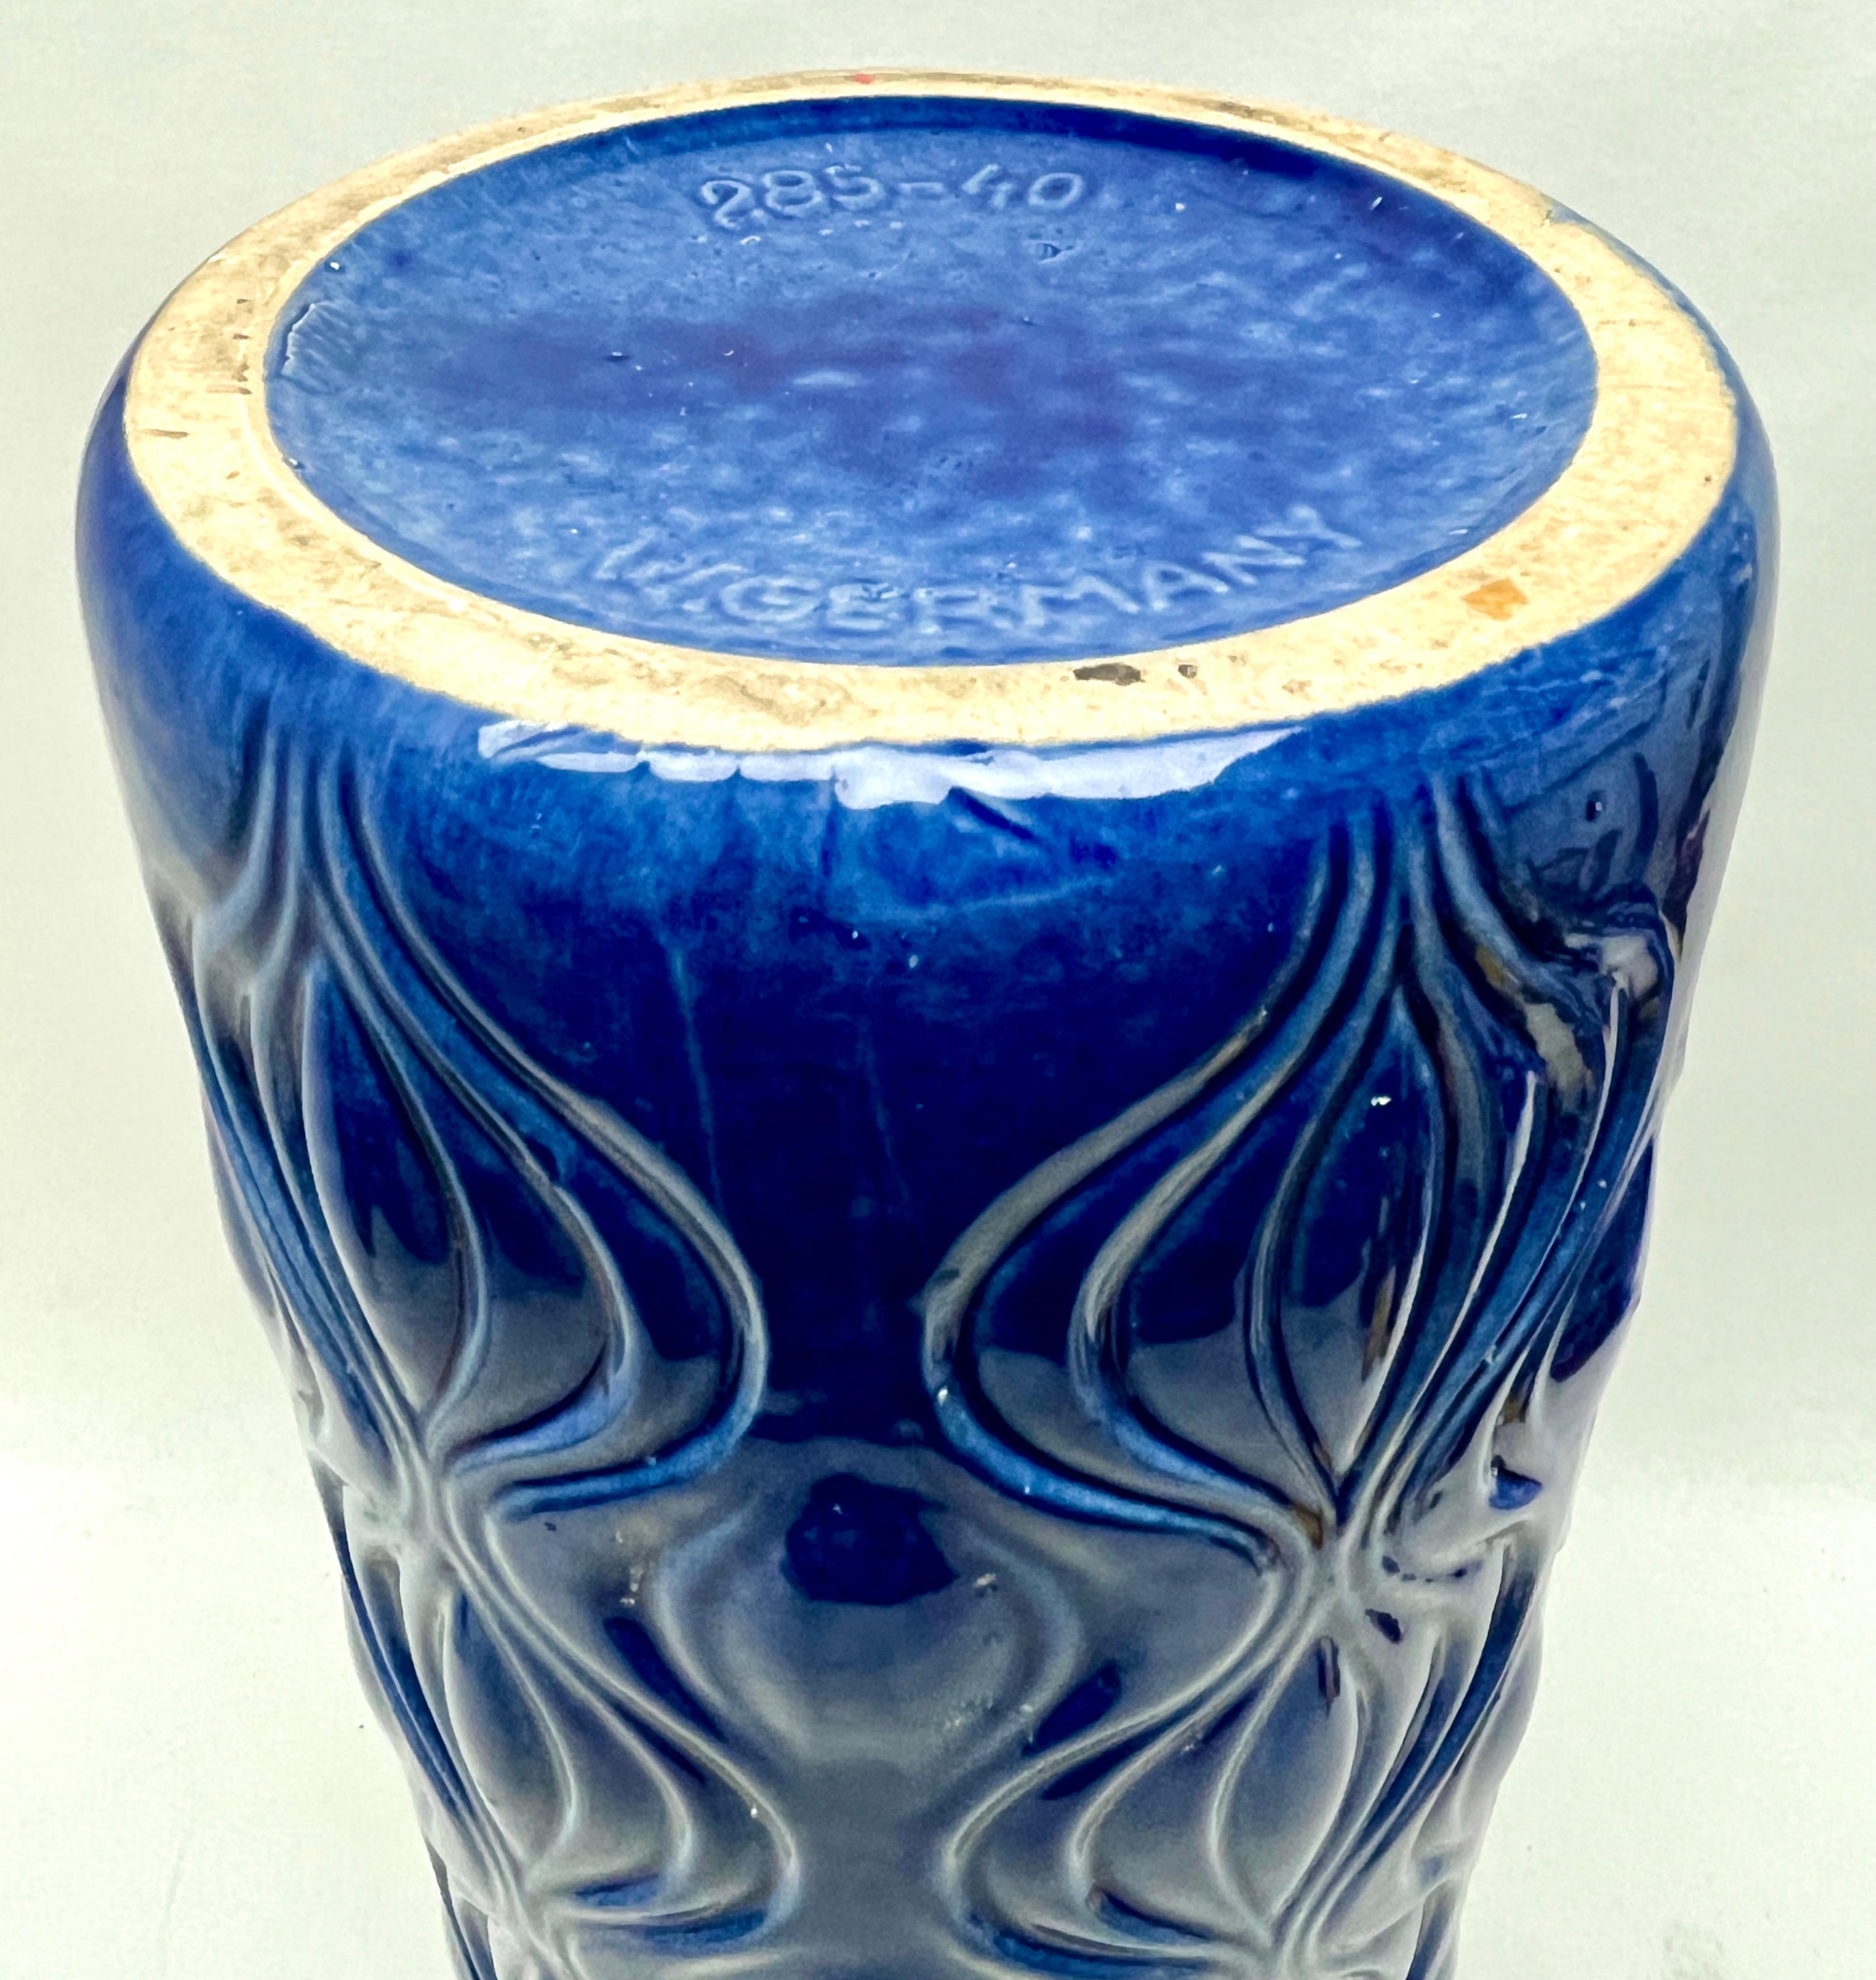 'Amsterdam' Floor Vase 'Scheurich, Blue Model 285-40' W-Germany, 1960s For Sale 1